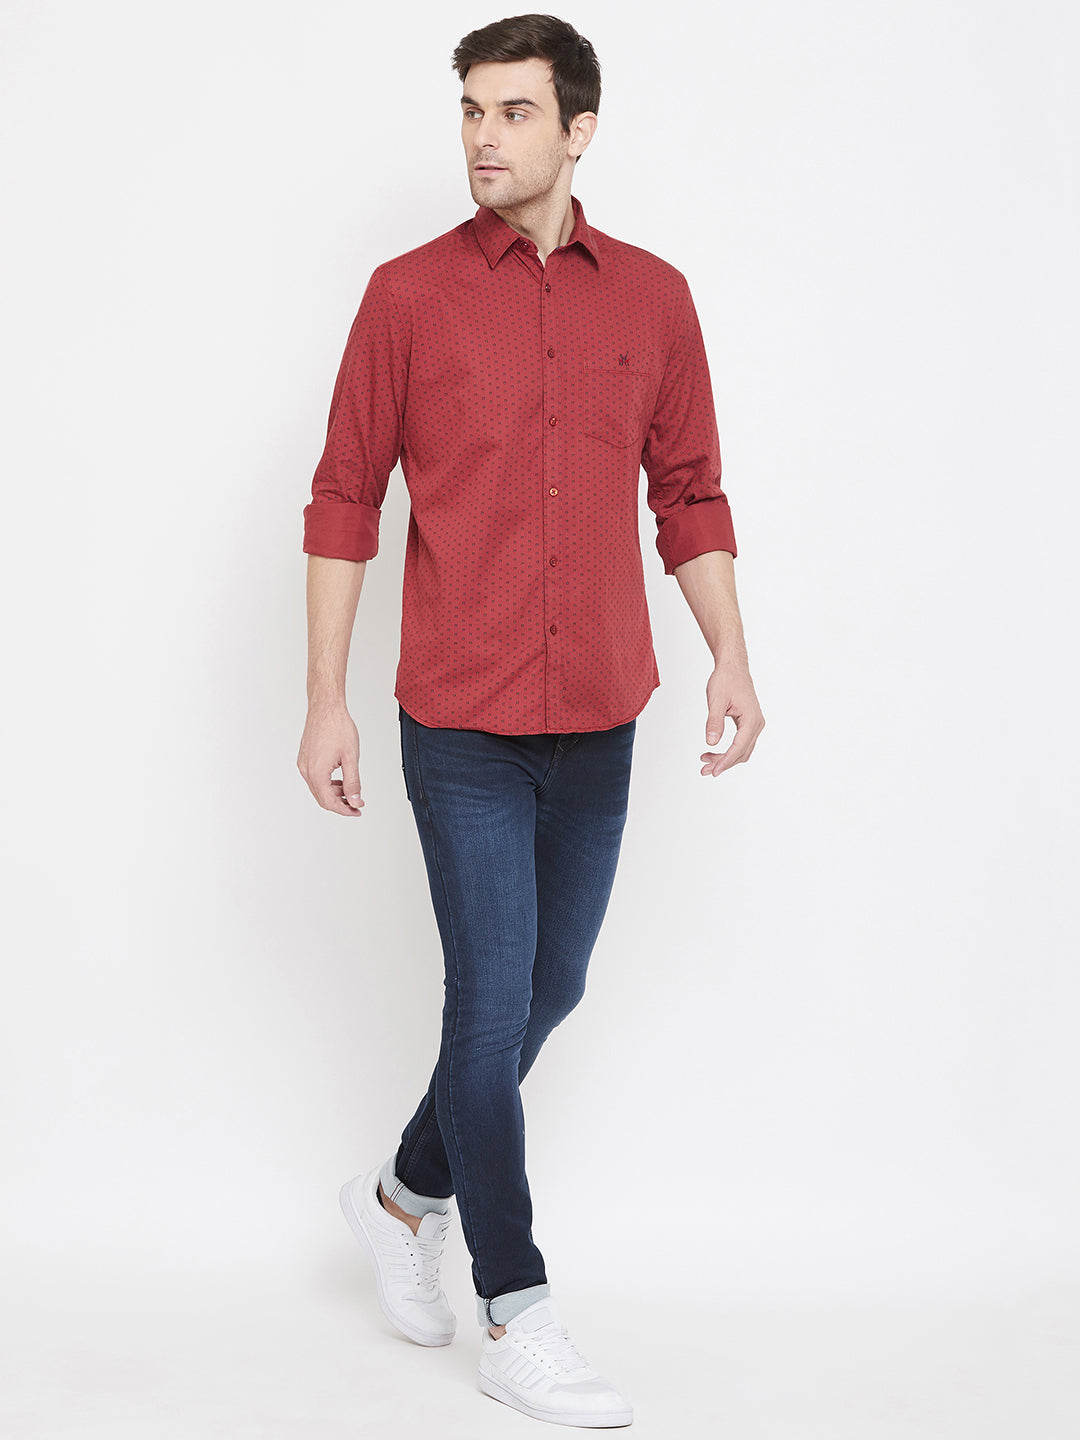 Red Printed Button up Shirt - Men Shirts